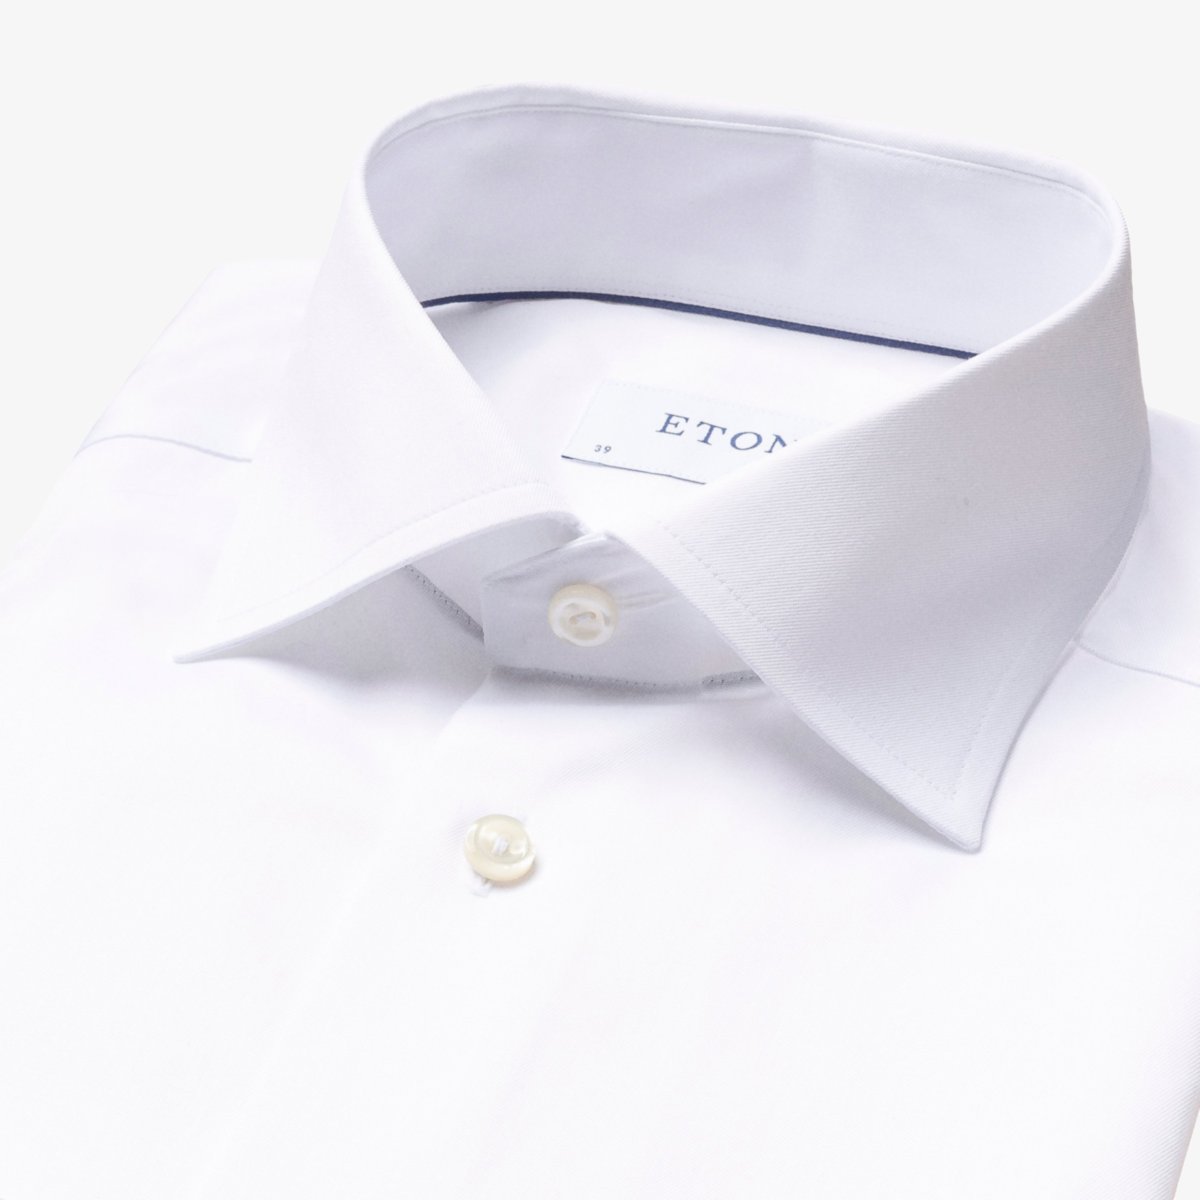 Eton white slim fit signature twill shirt